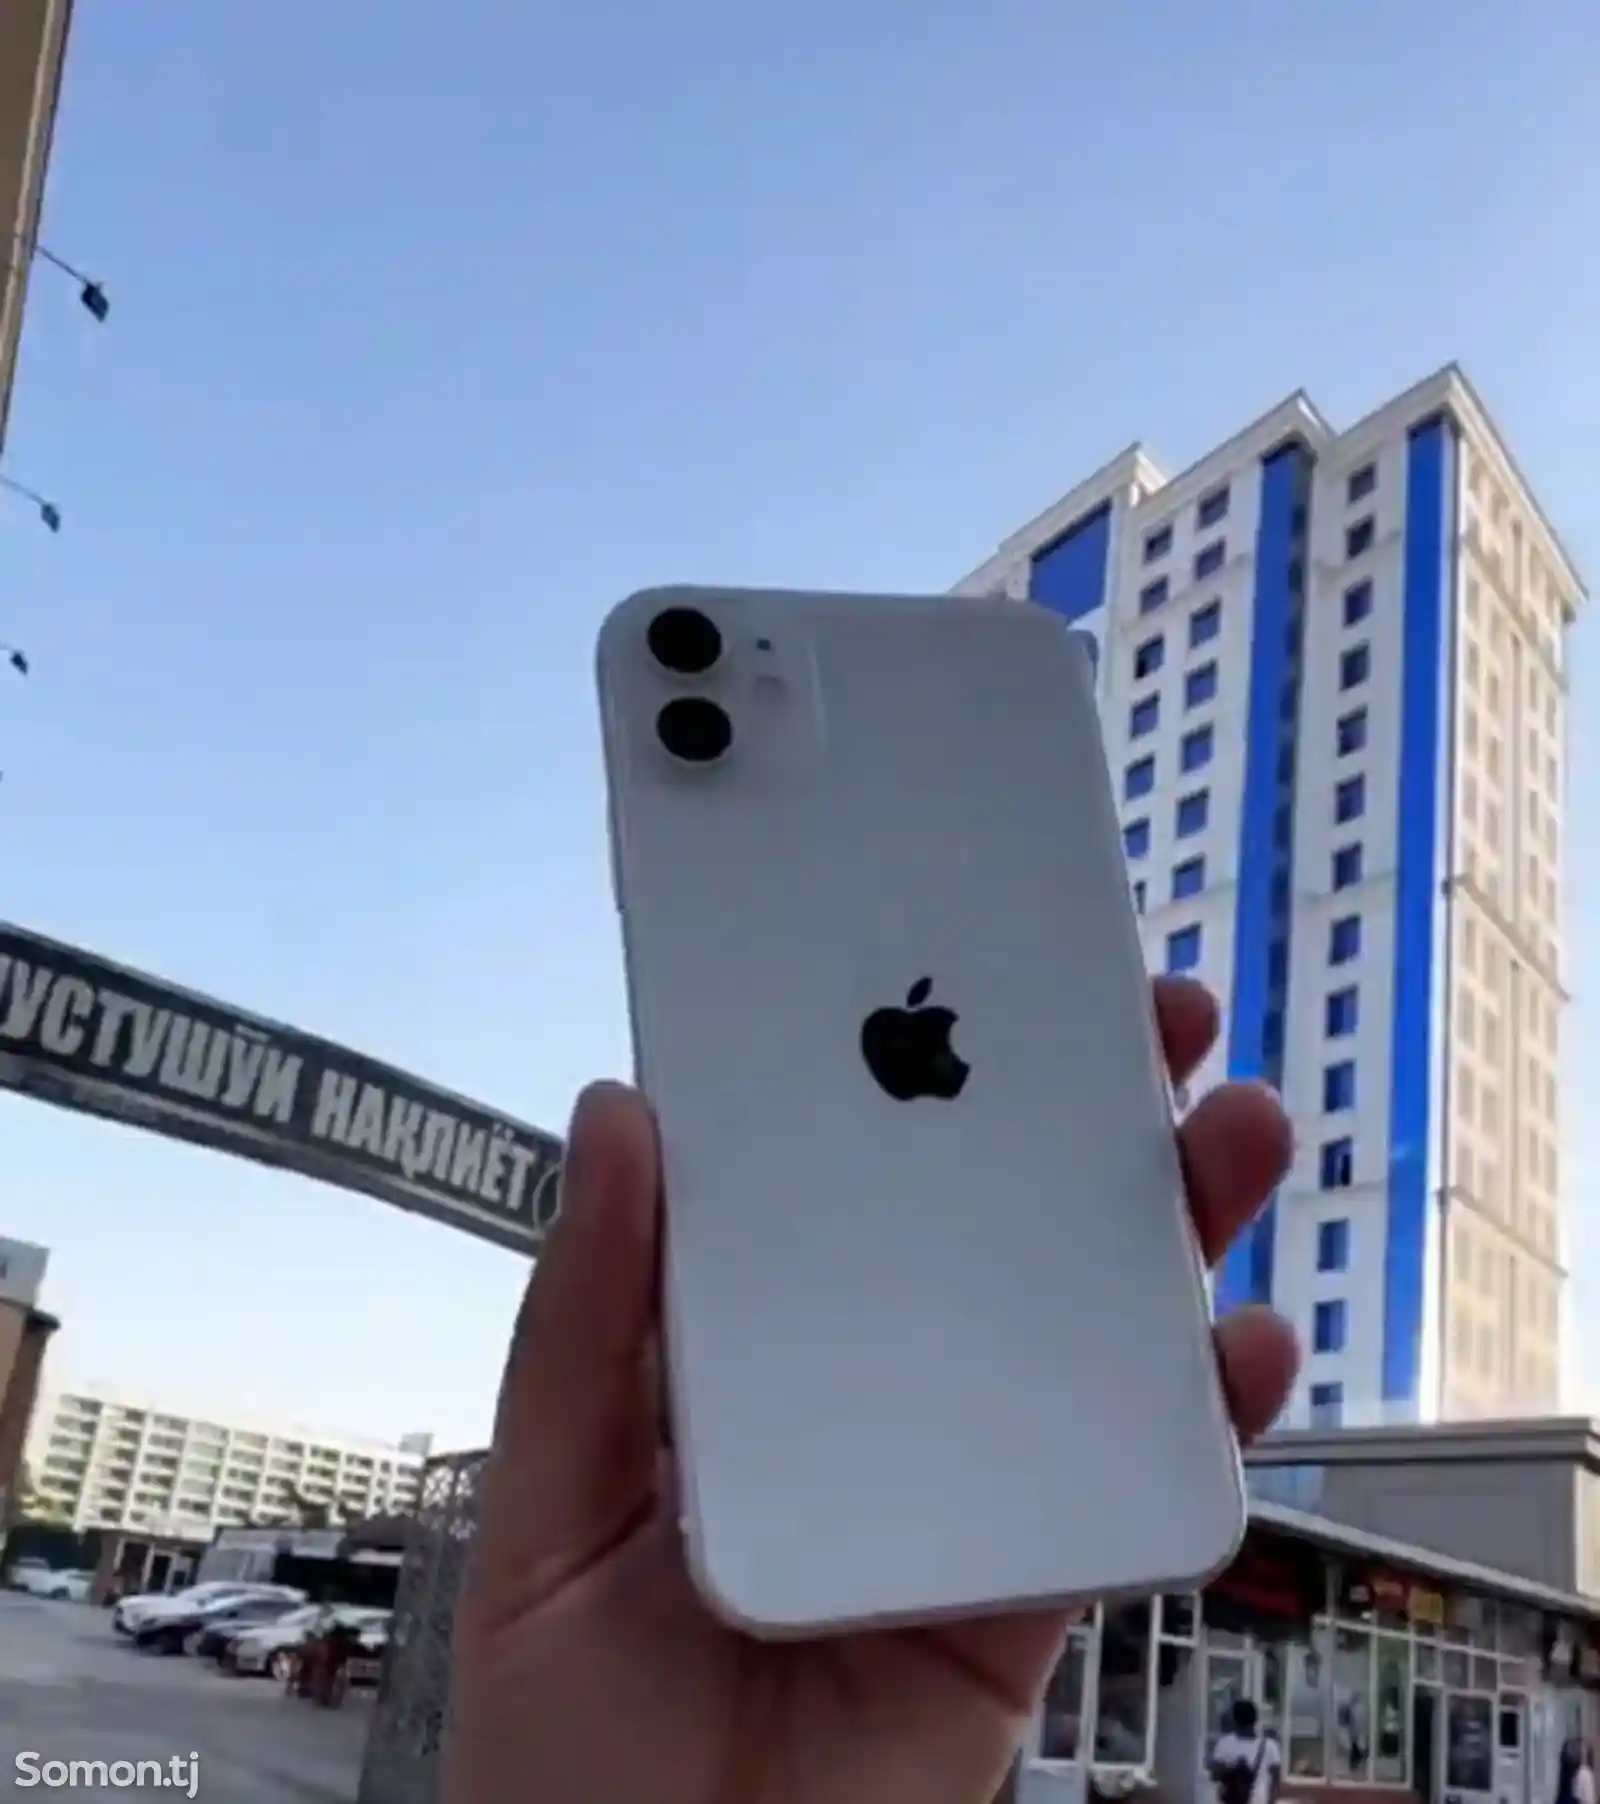 Apple iPhone 11, 64 gb, White